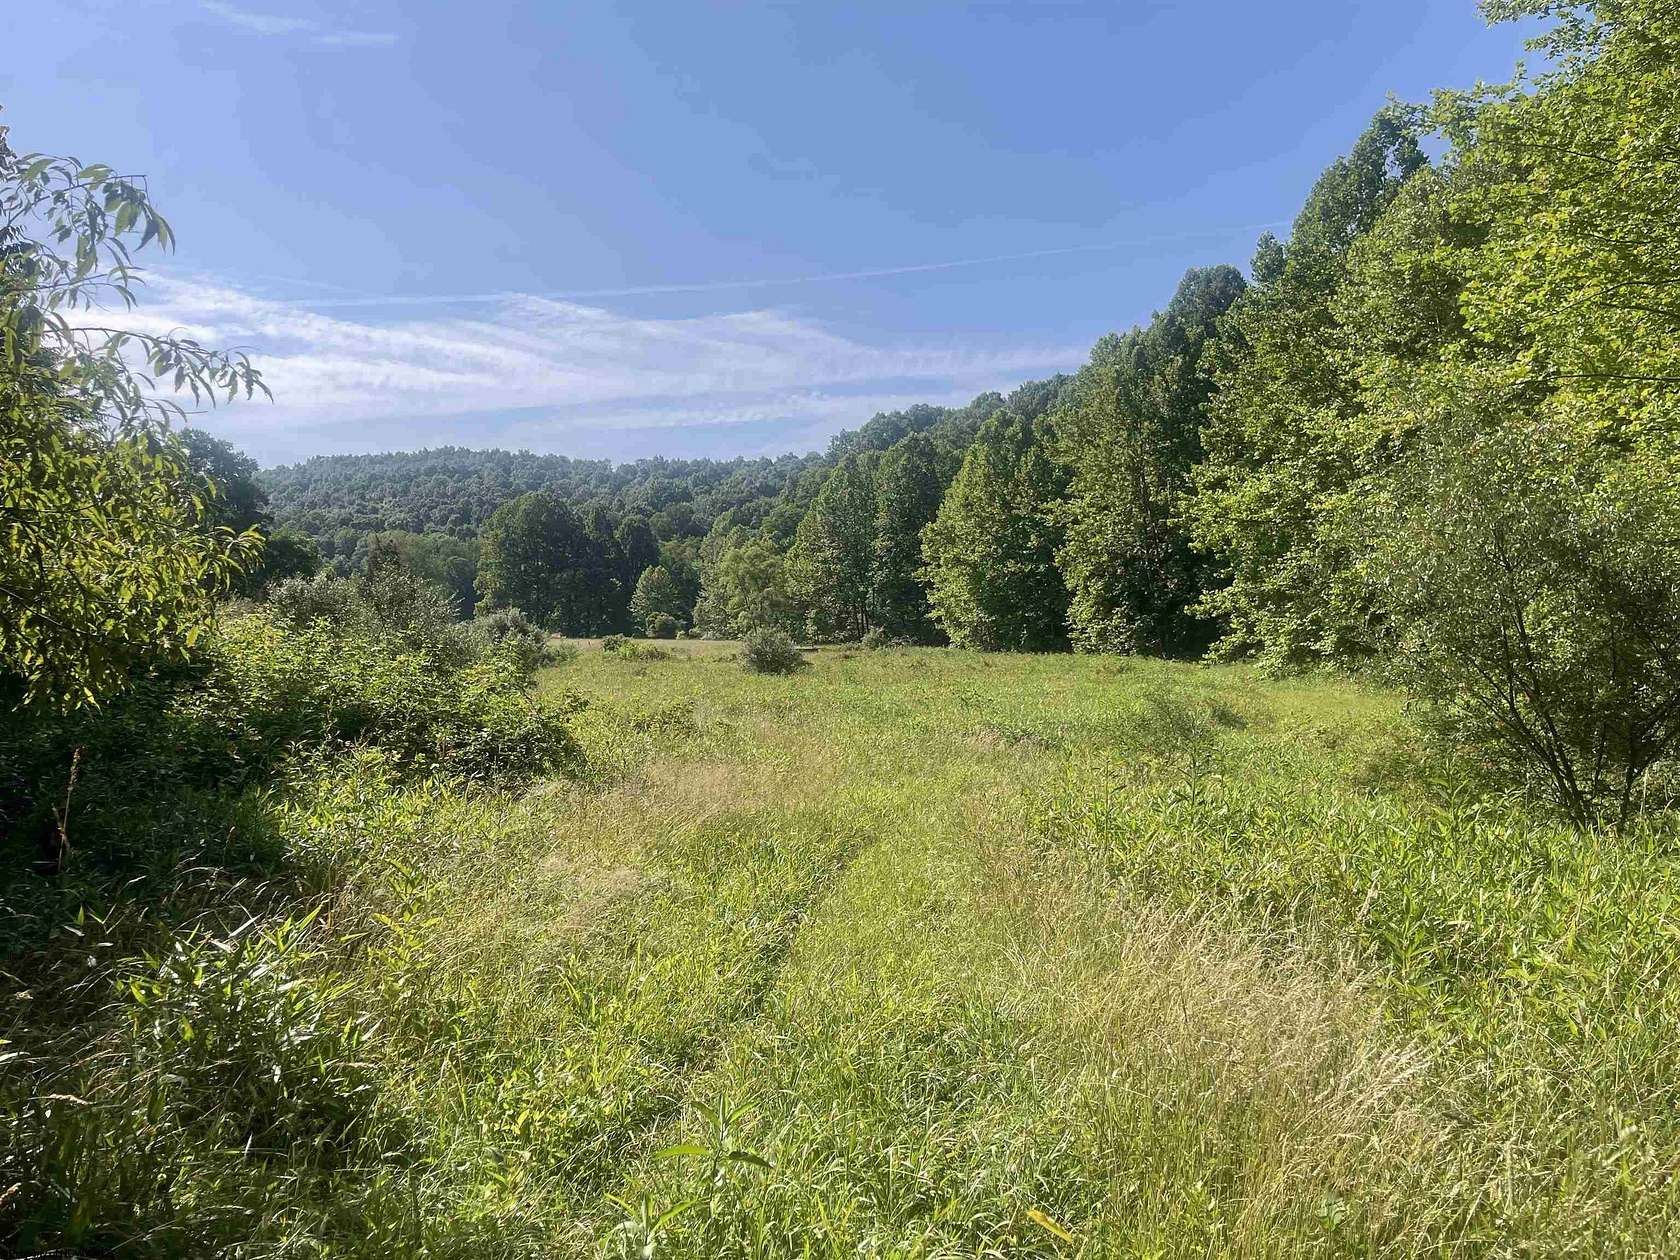 30.73 Acres of Land for Sale in Roanoke, West Virginia